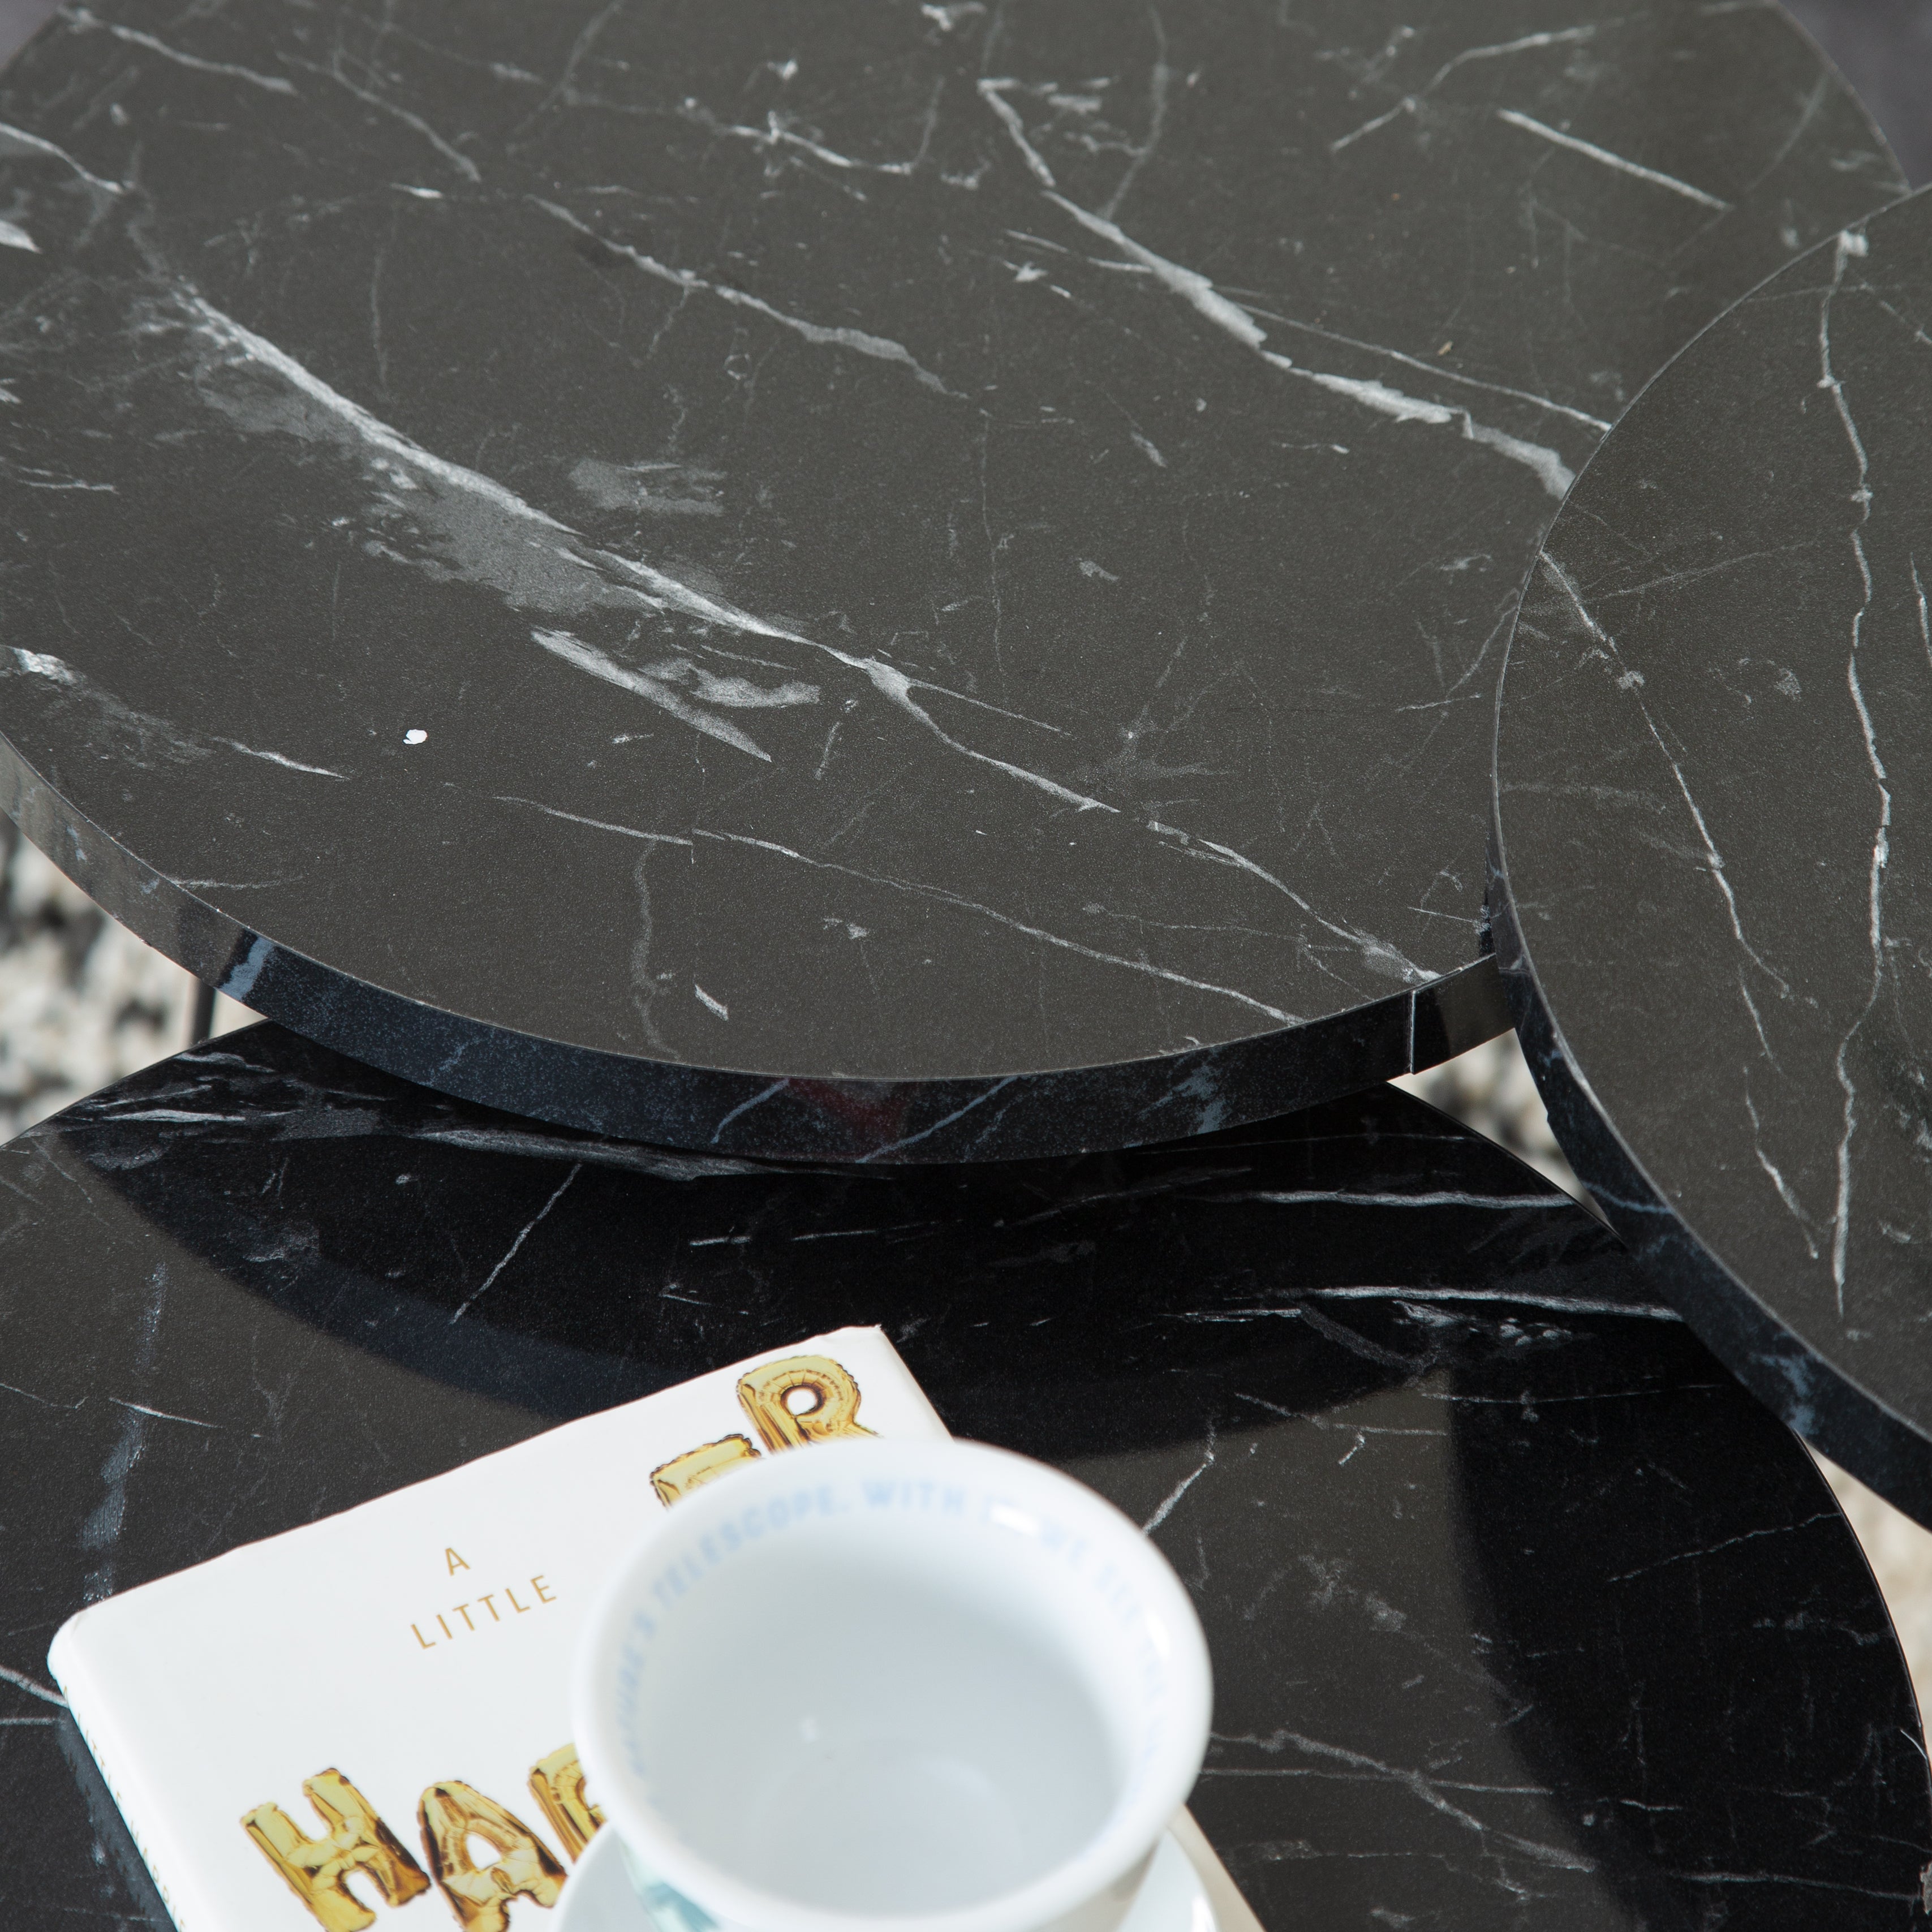 Terek Set of 3 Round Side Tables - Black Marble